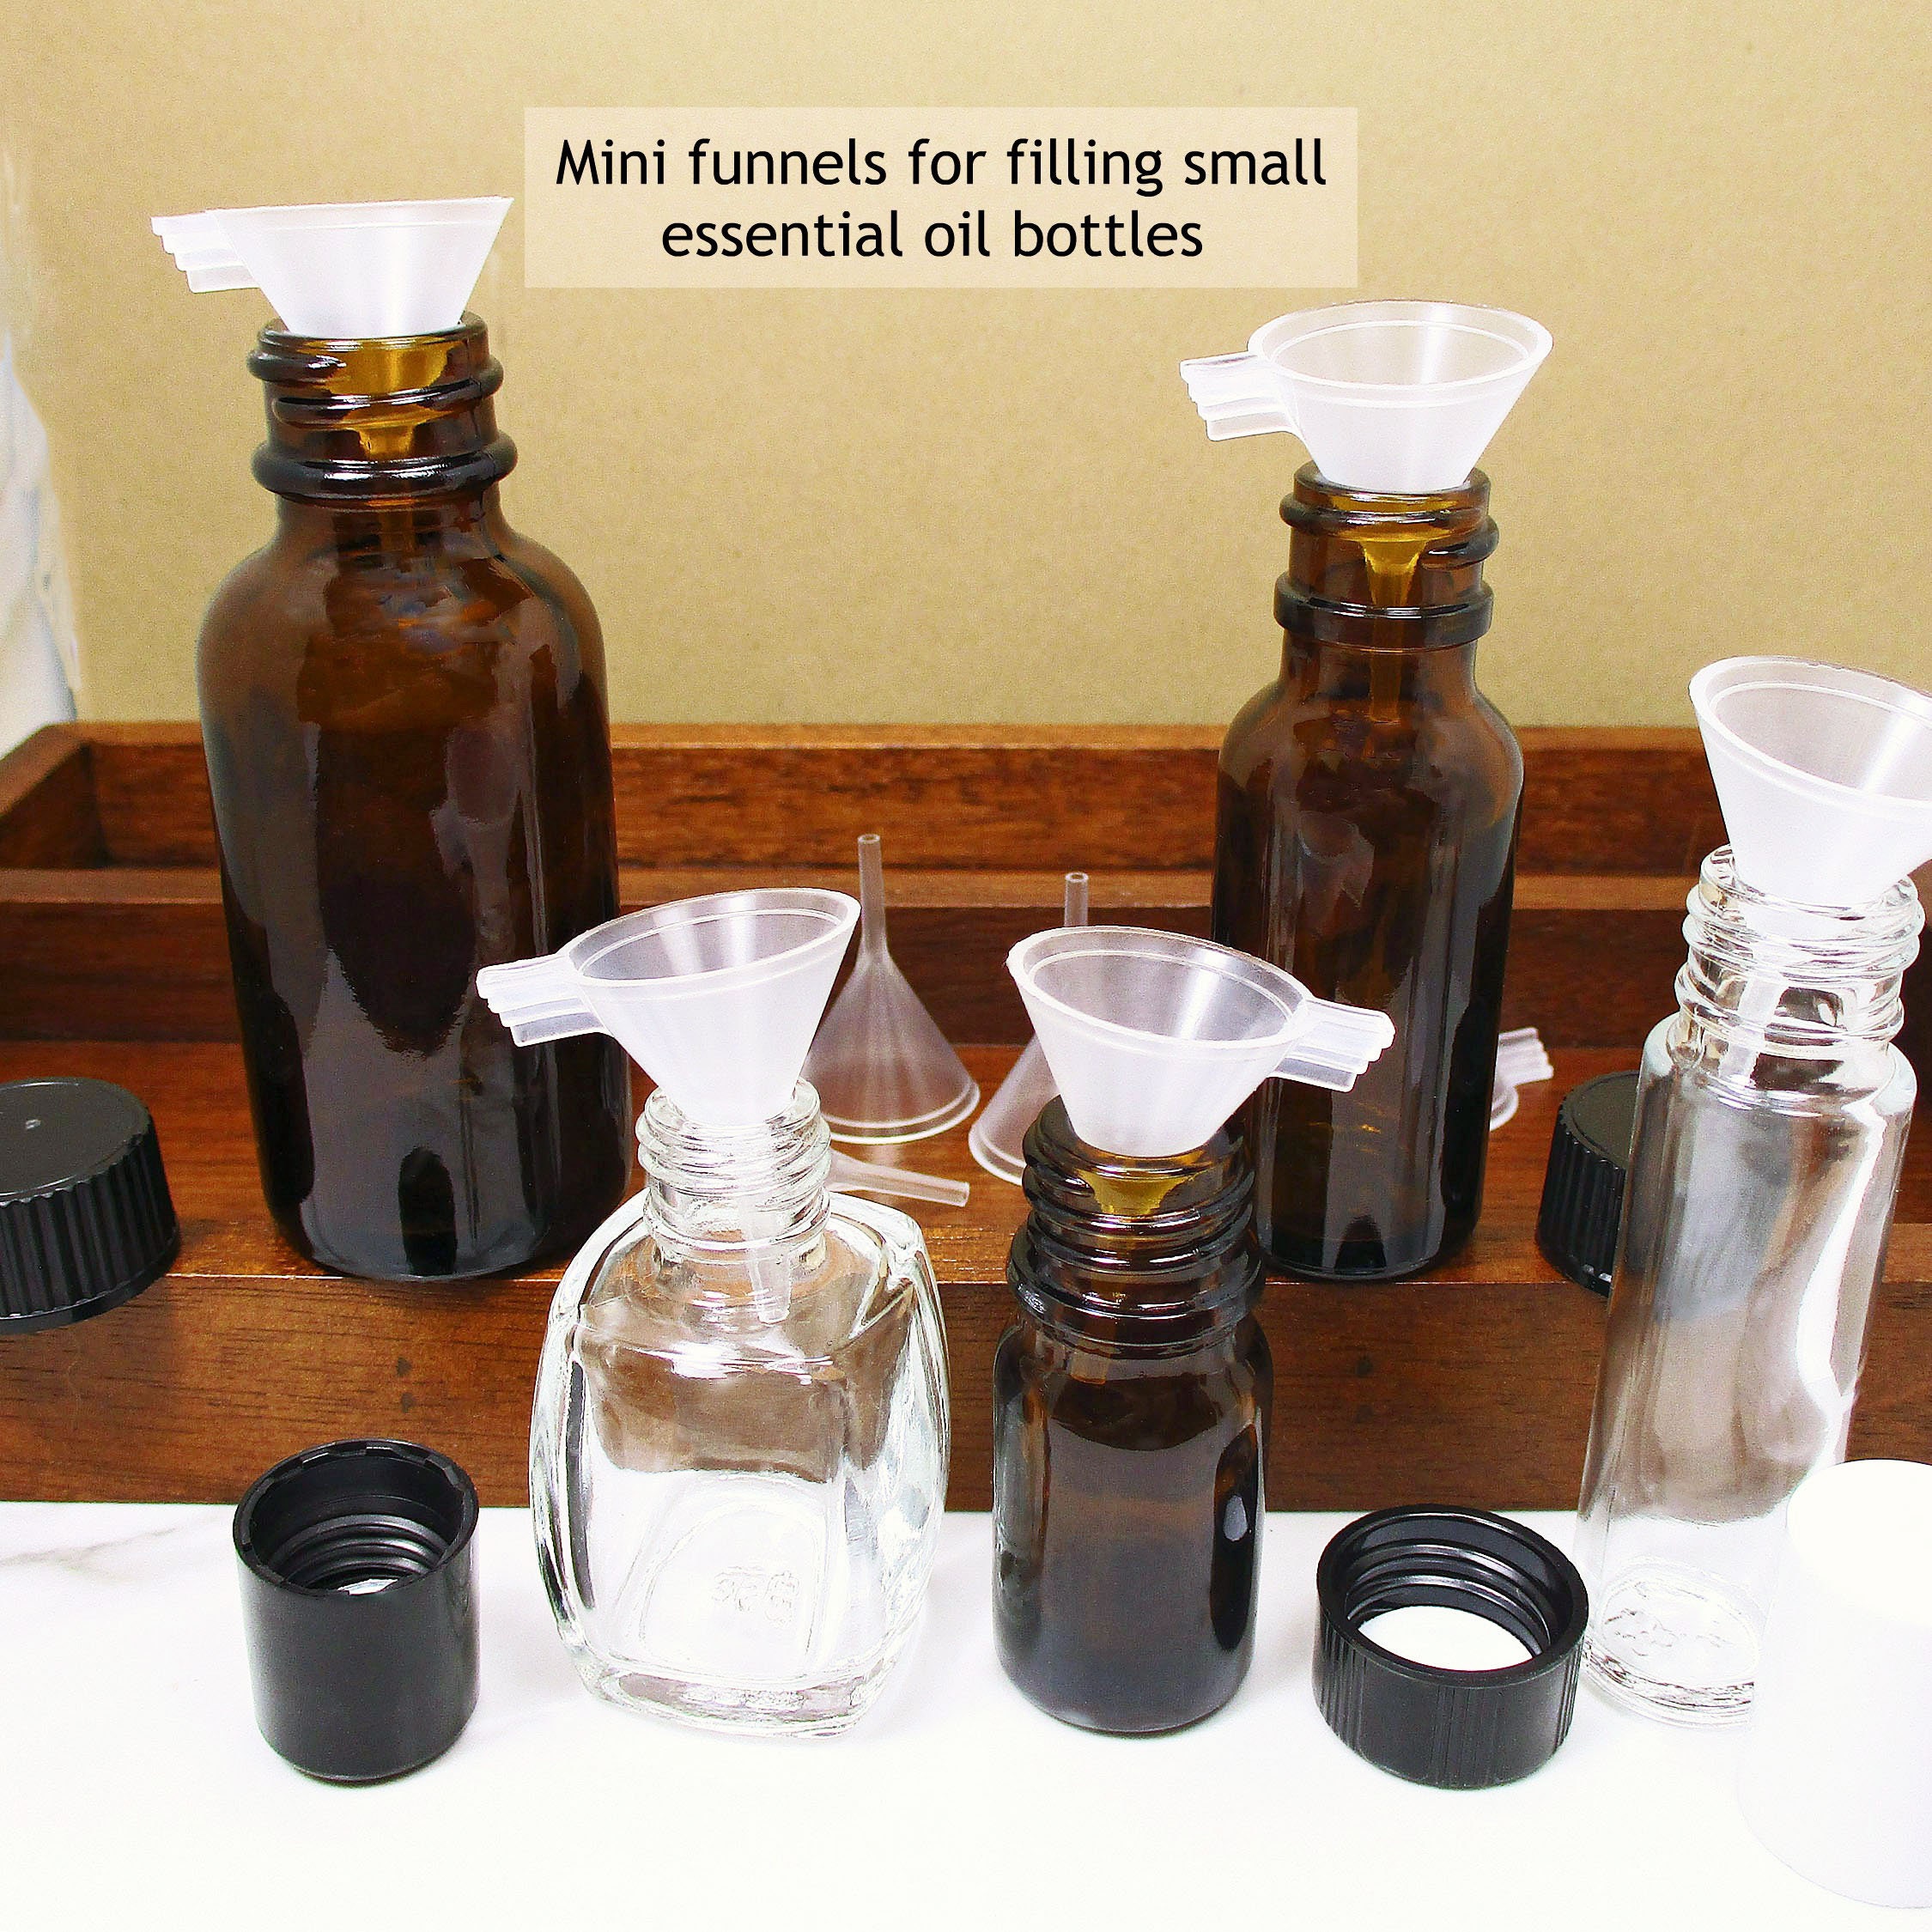 25 Mini Funnels Small Funnels to Fill Perfume Bottles, Plastic Funnels for Tiny  Miniature Bottles, Essential Oil Bottle, Powders or Glitter 